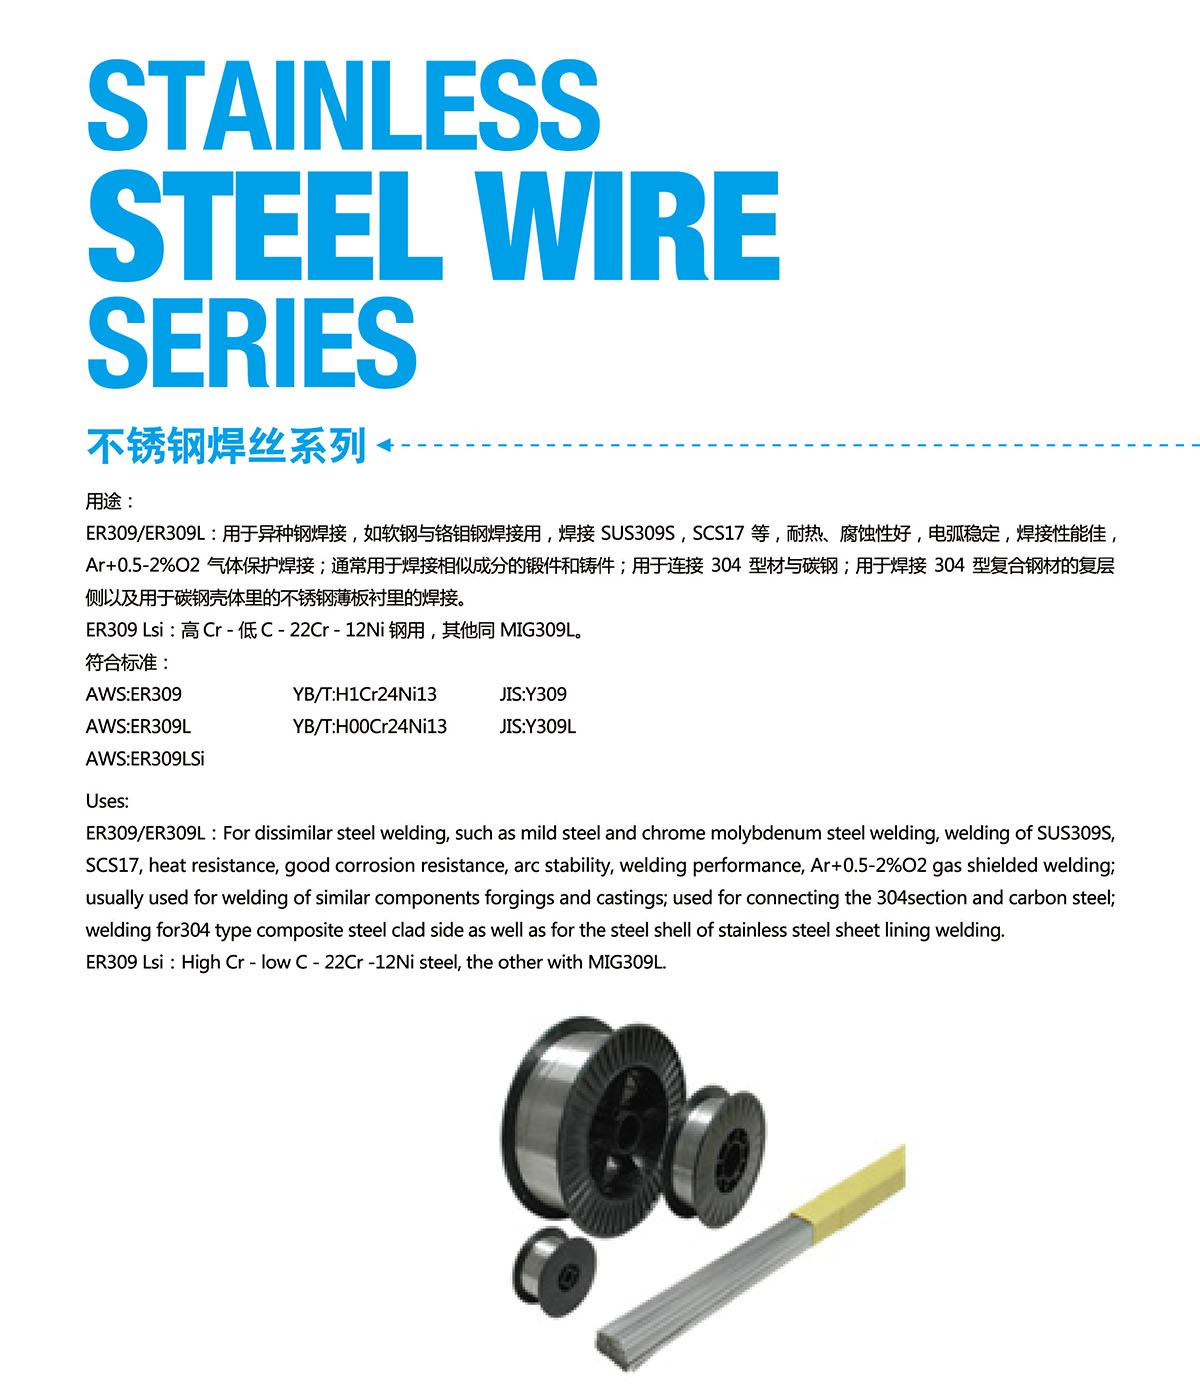 ER309 Stainless Steel Welding Wire样册1.jpg